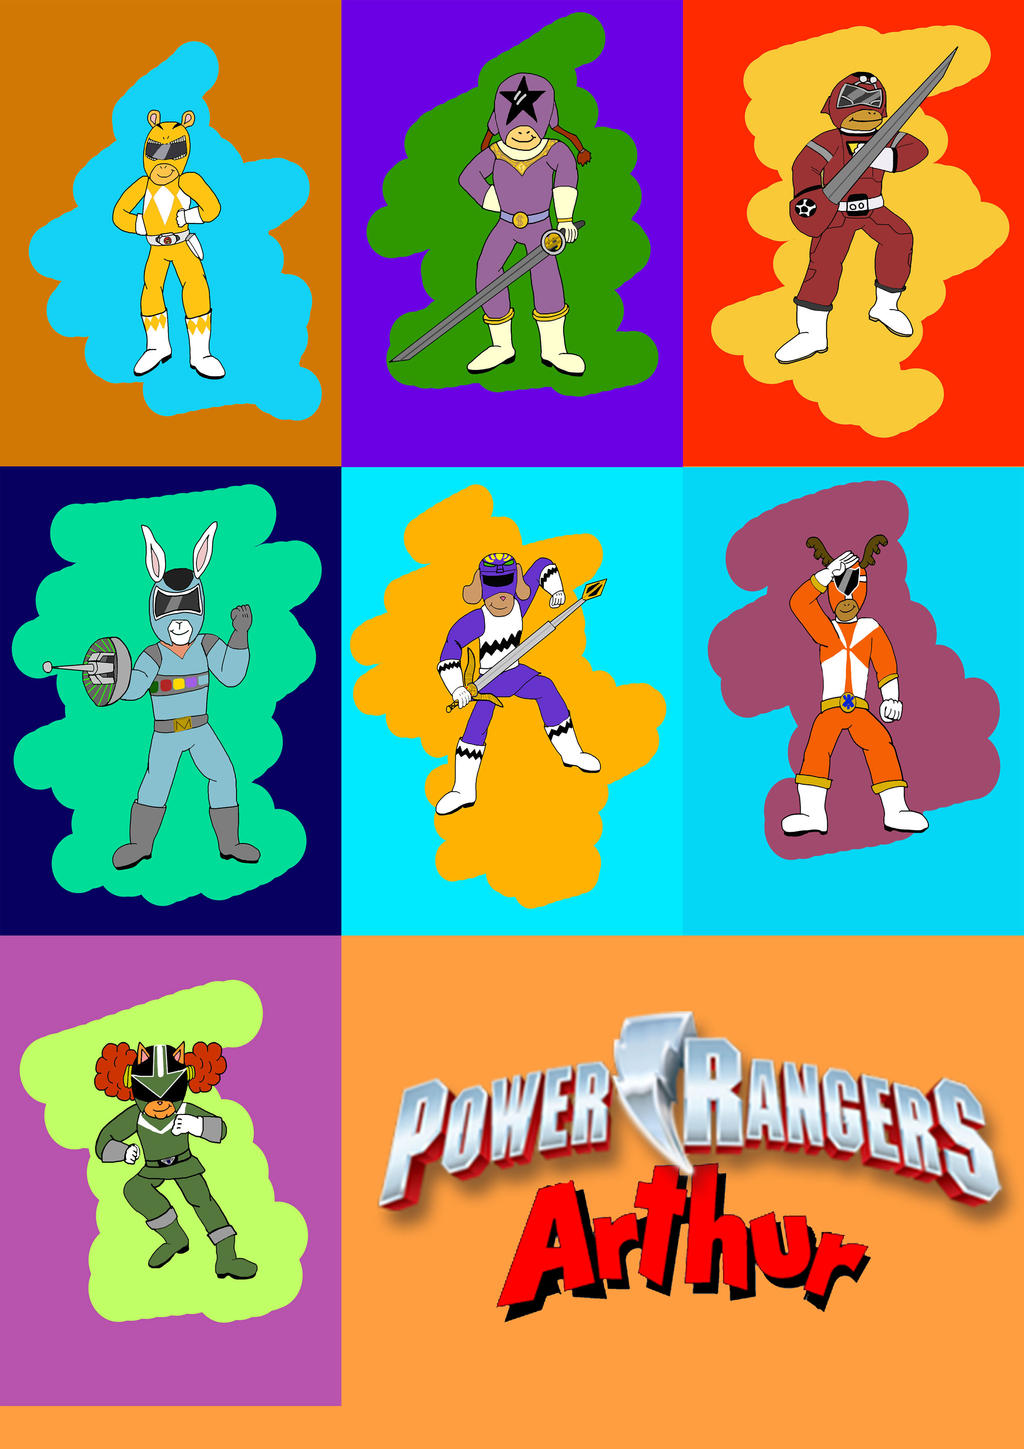 Arthur Power Rangers Parody (Part 1)